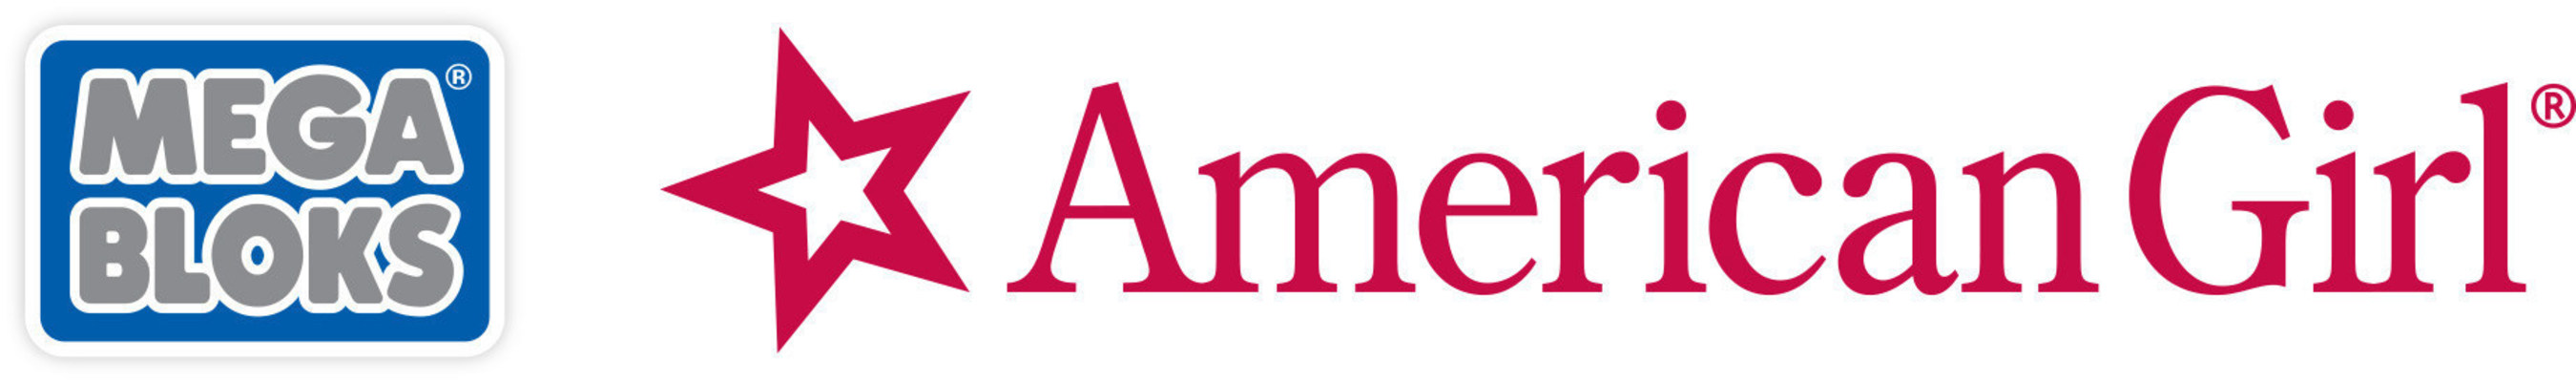 Mega Bloks American Girl Logo (PRNewsFoto/American Girl)